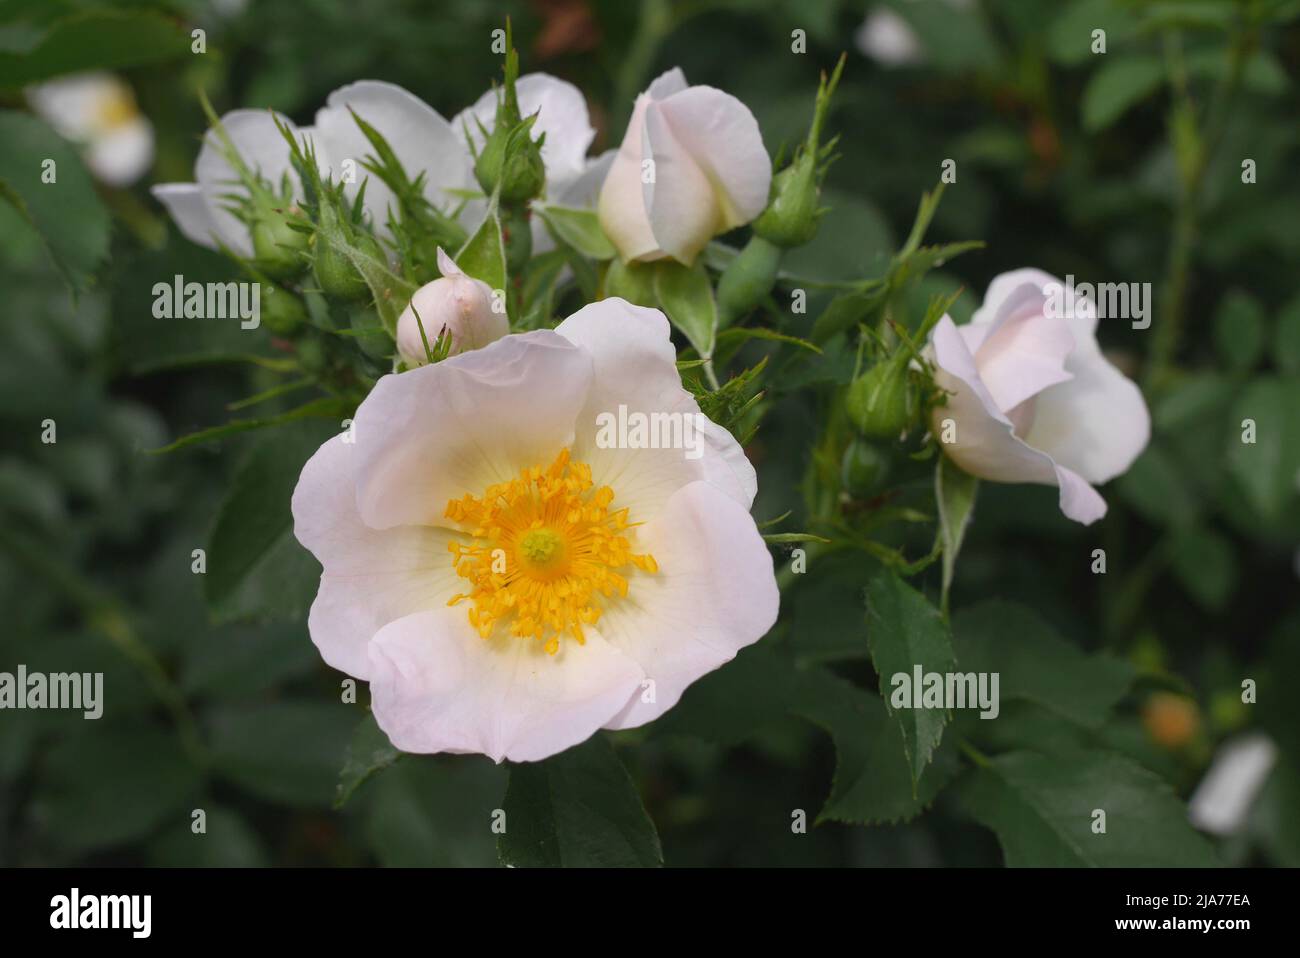 Dog rose, Rosa cantina, growing in a garden, Szigethalom, Hungary Stock Photo